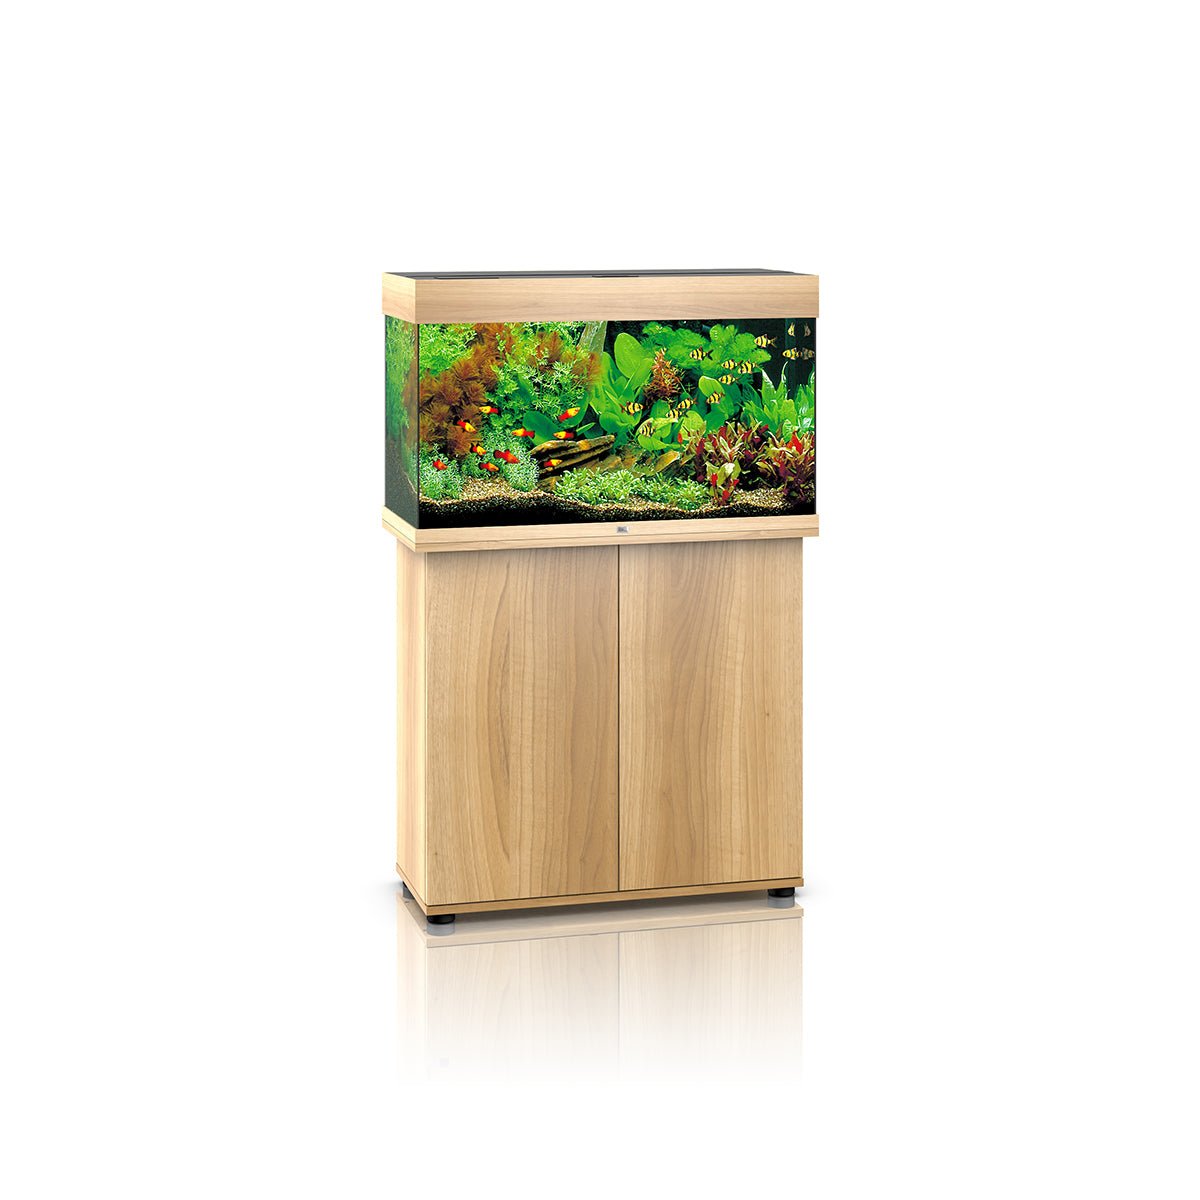 Juwel Rio 125 LED Aquarium and Cabinet (Light Wood) - Charterhouse Aquatics